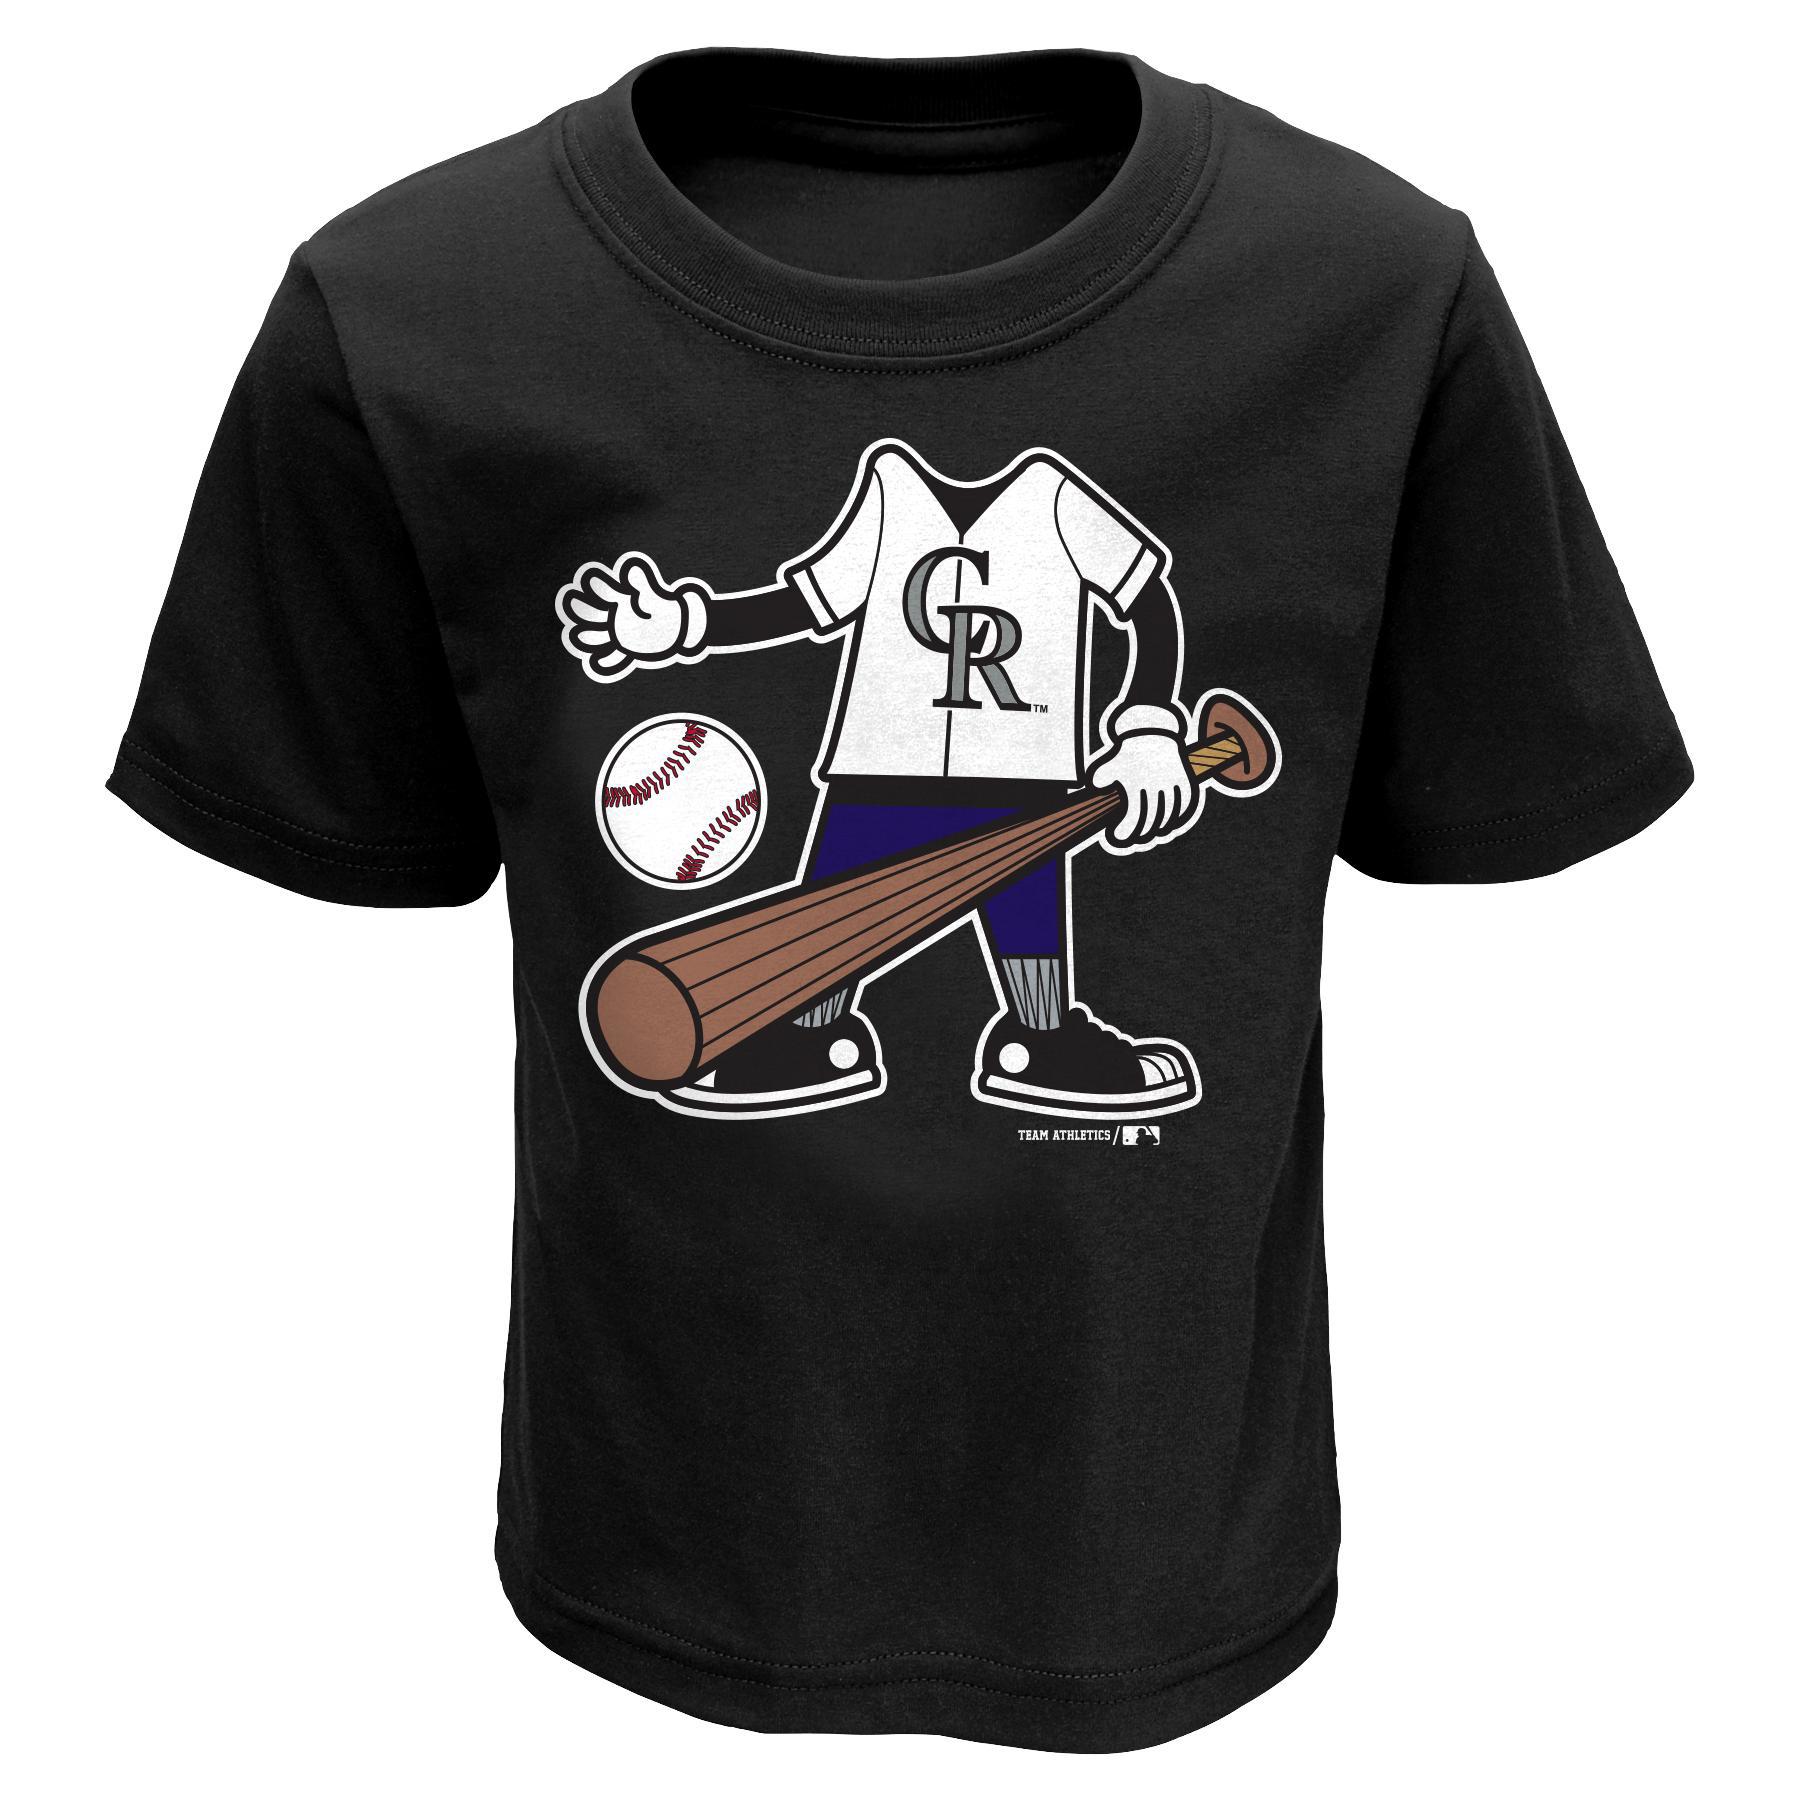 MLB Infant & Toddler Boy's T-Shirt - Colorado Rockies